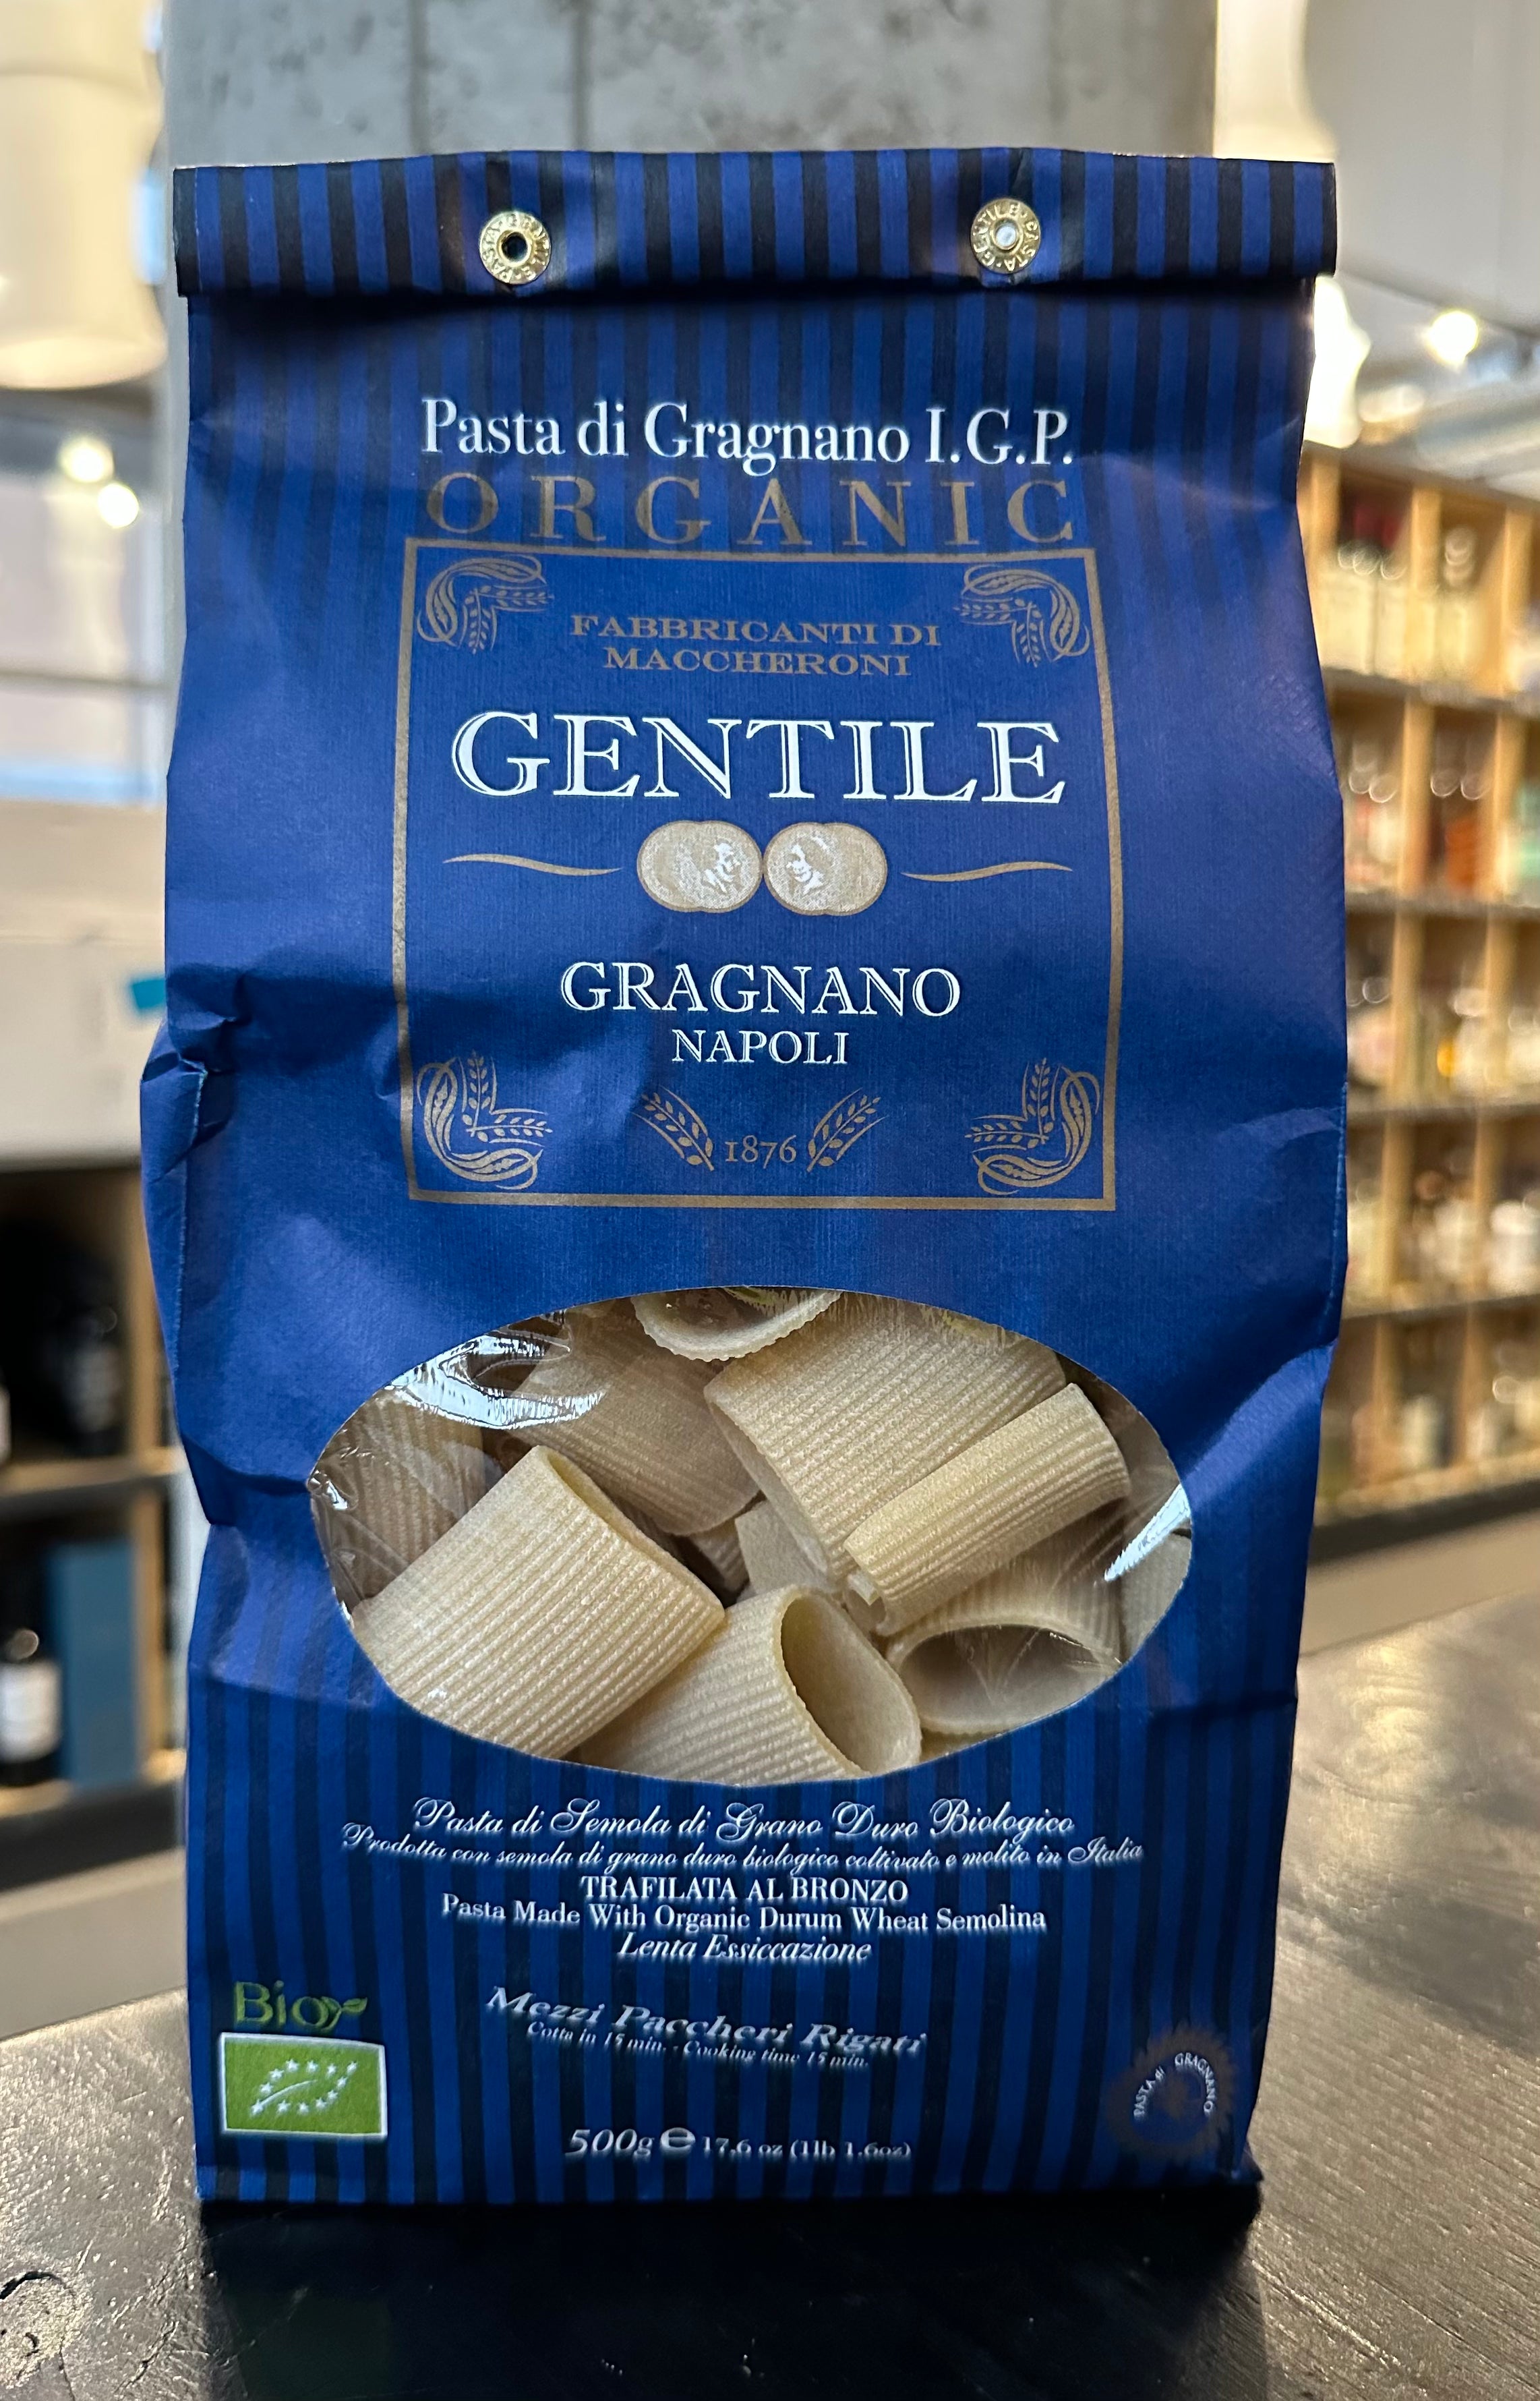 Gentile "Mezzi Paccheri Rigati" Pasta di Gragnano I.G.P.